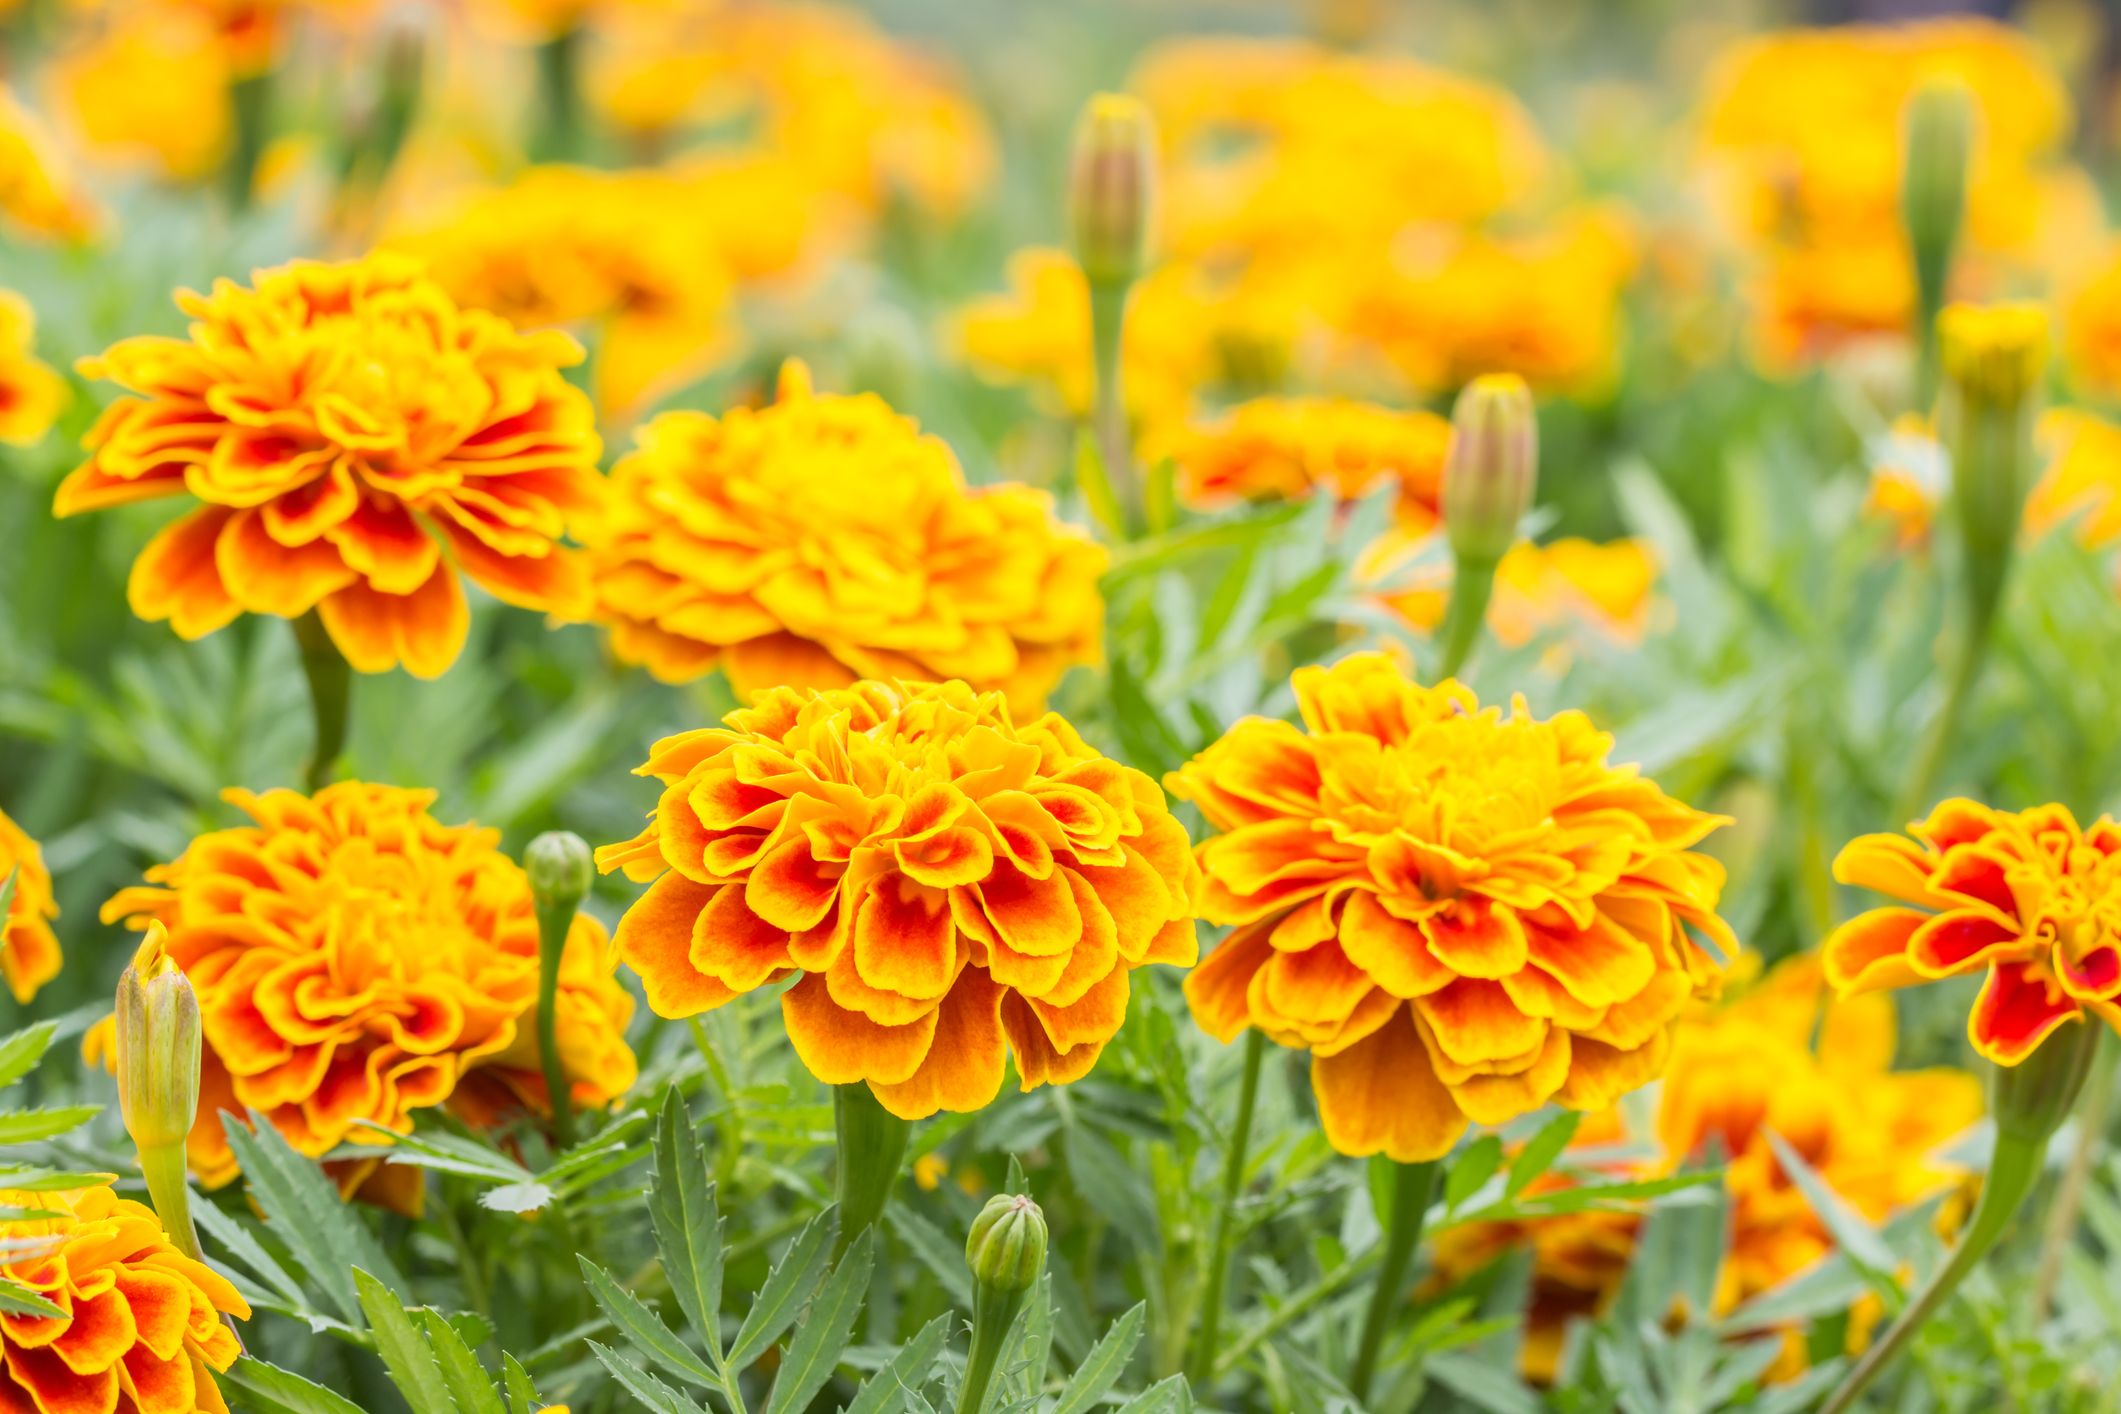 Image of French marigolds